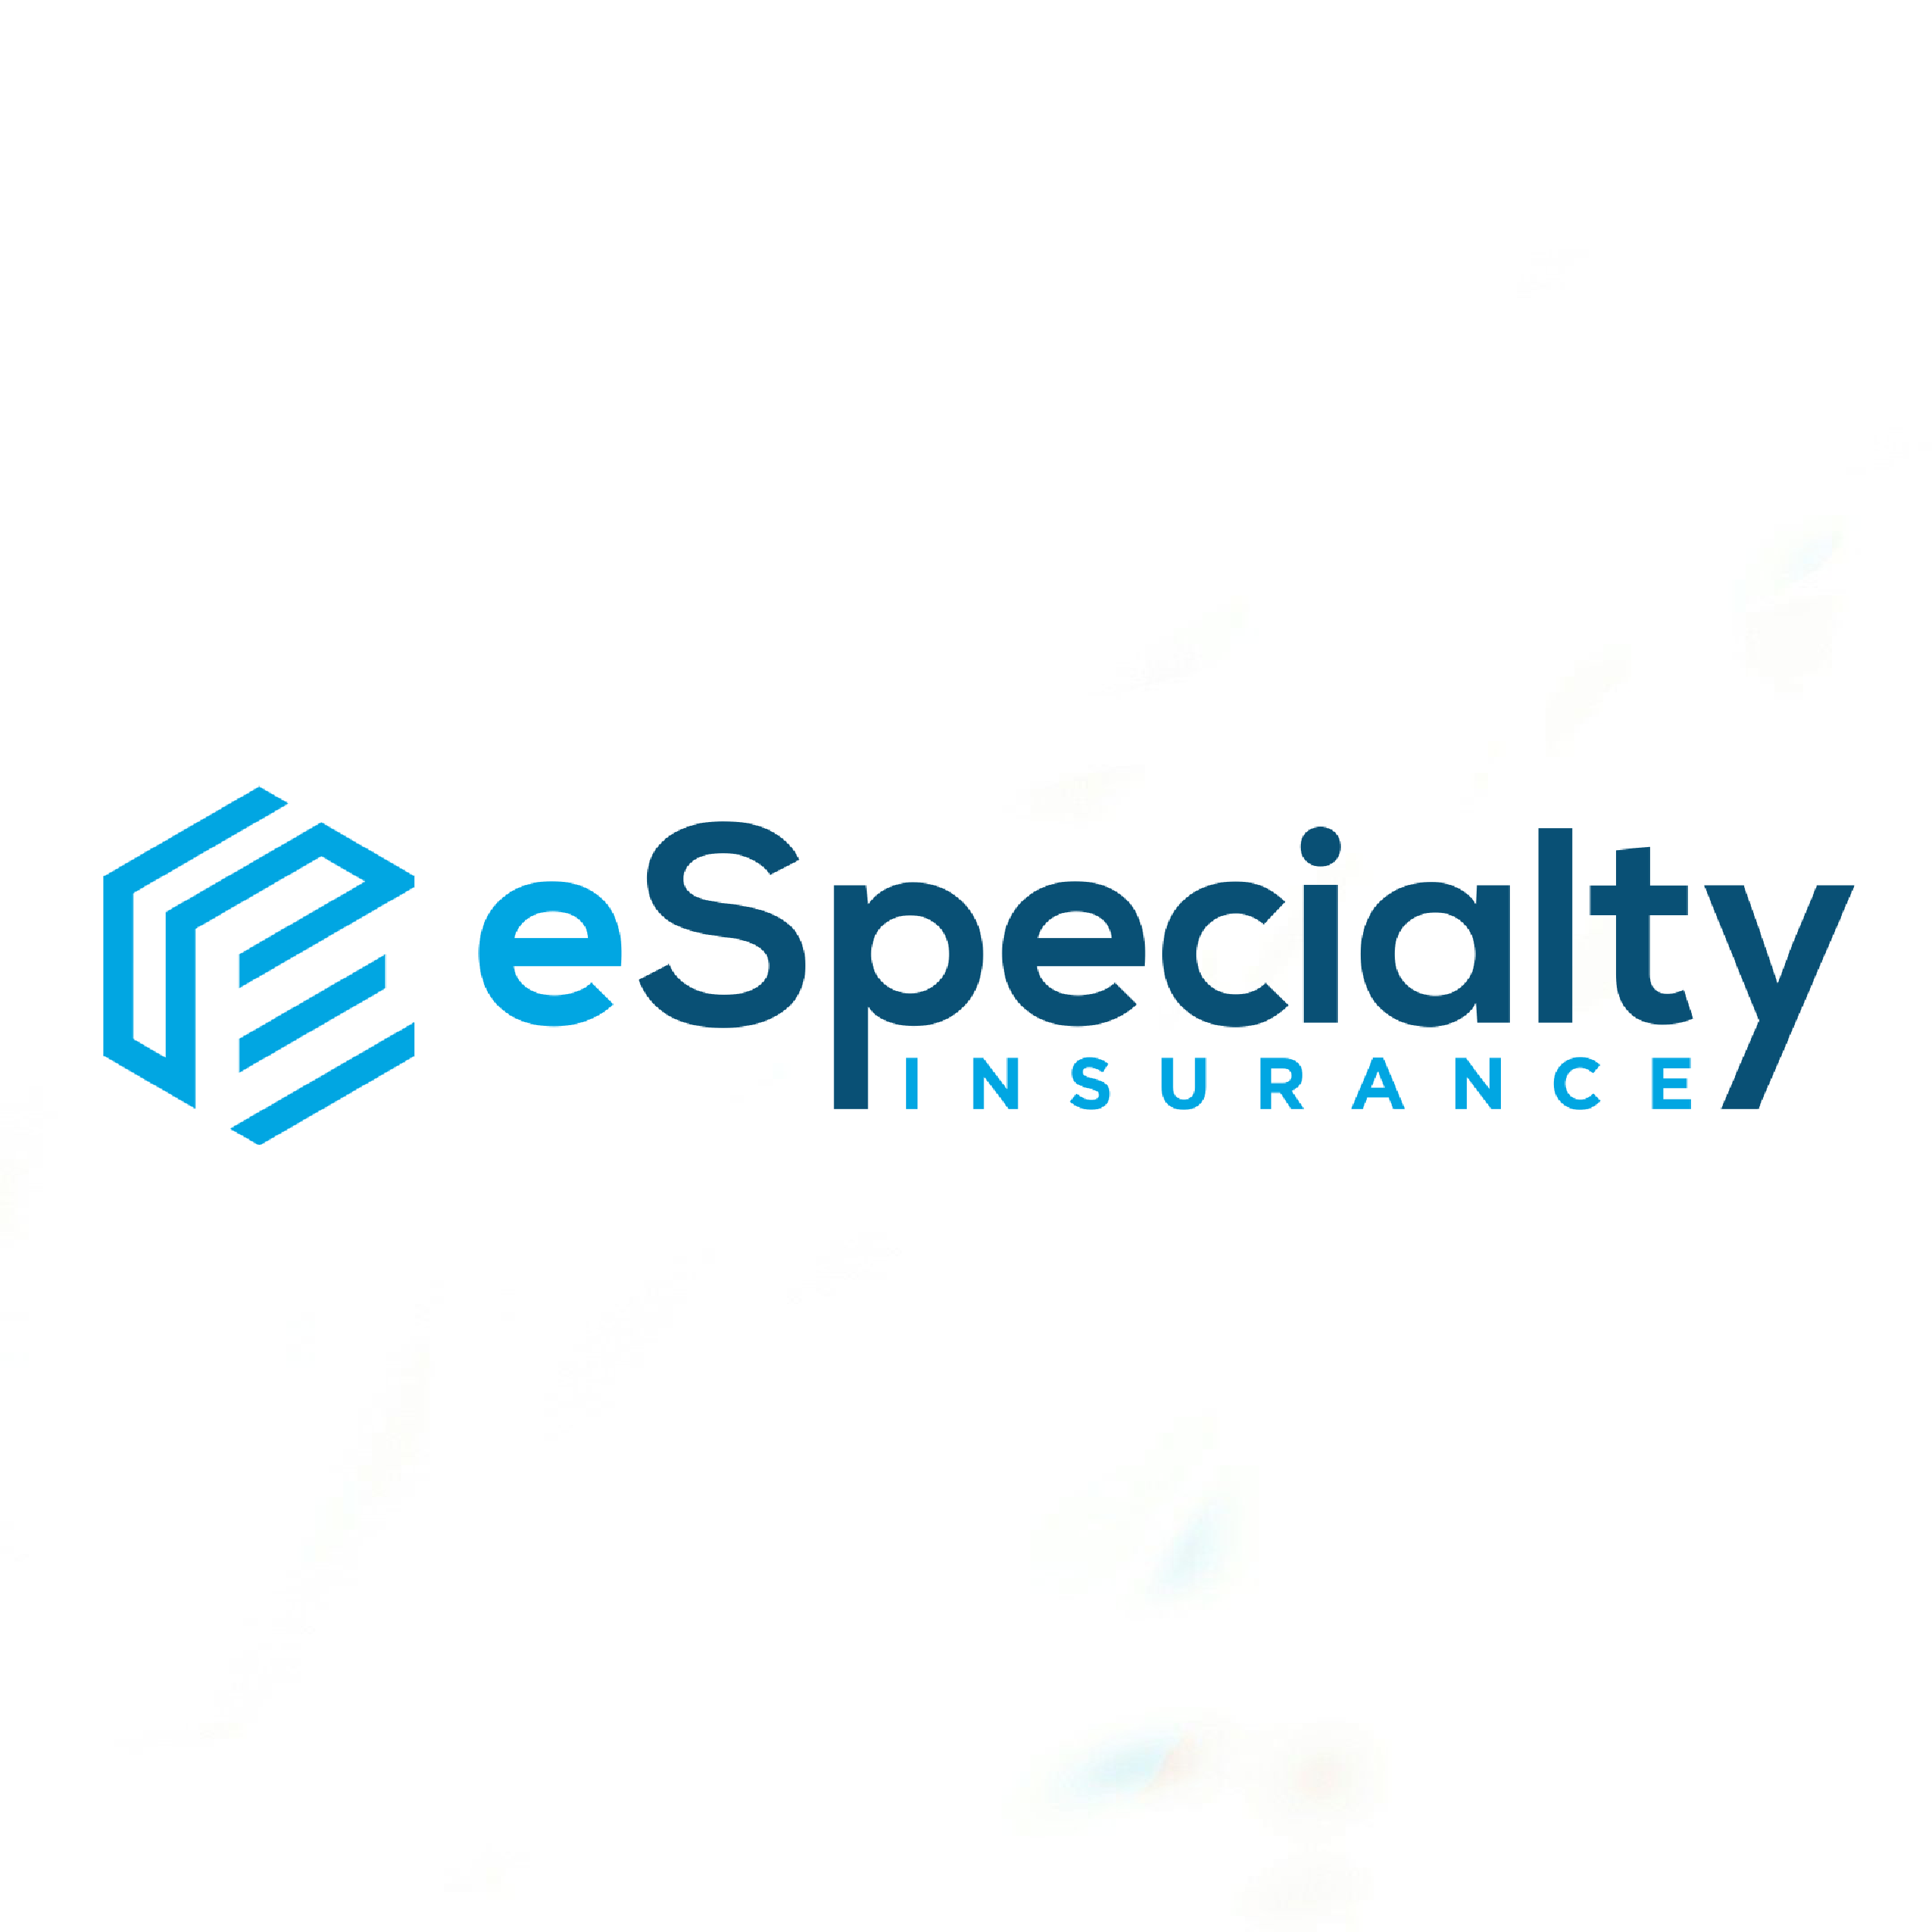 eSpecialty Insurance logo